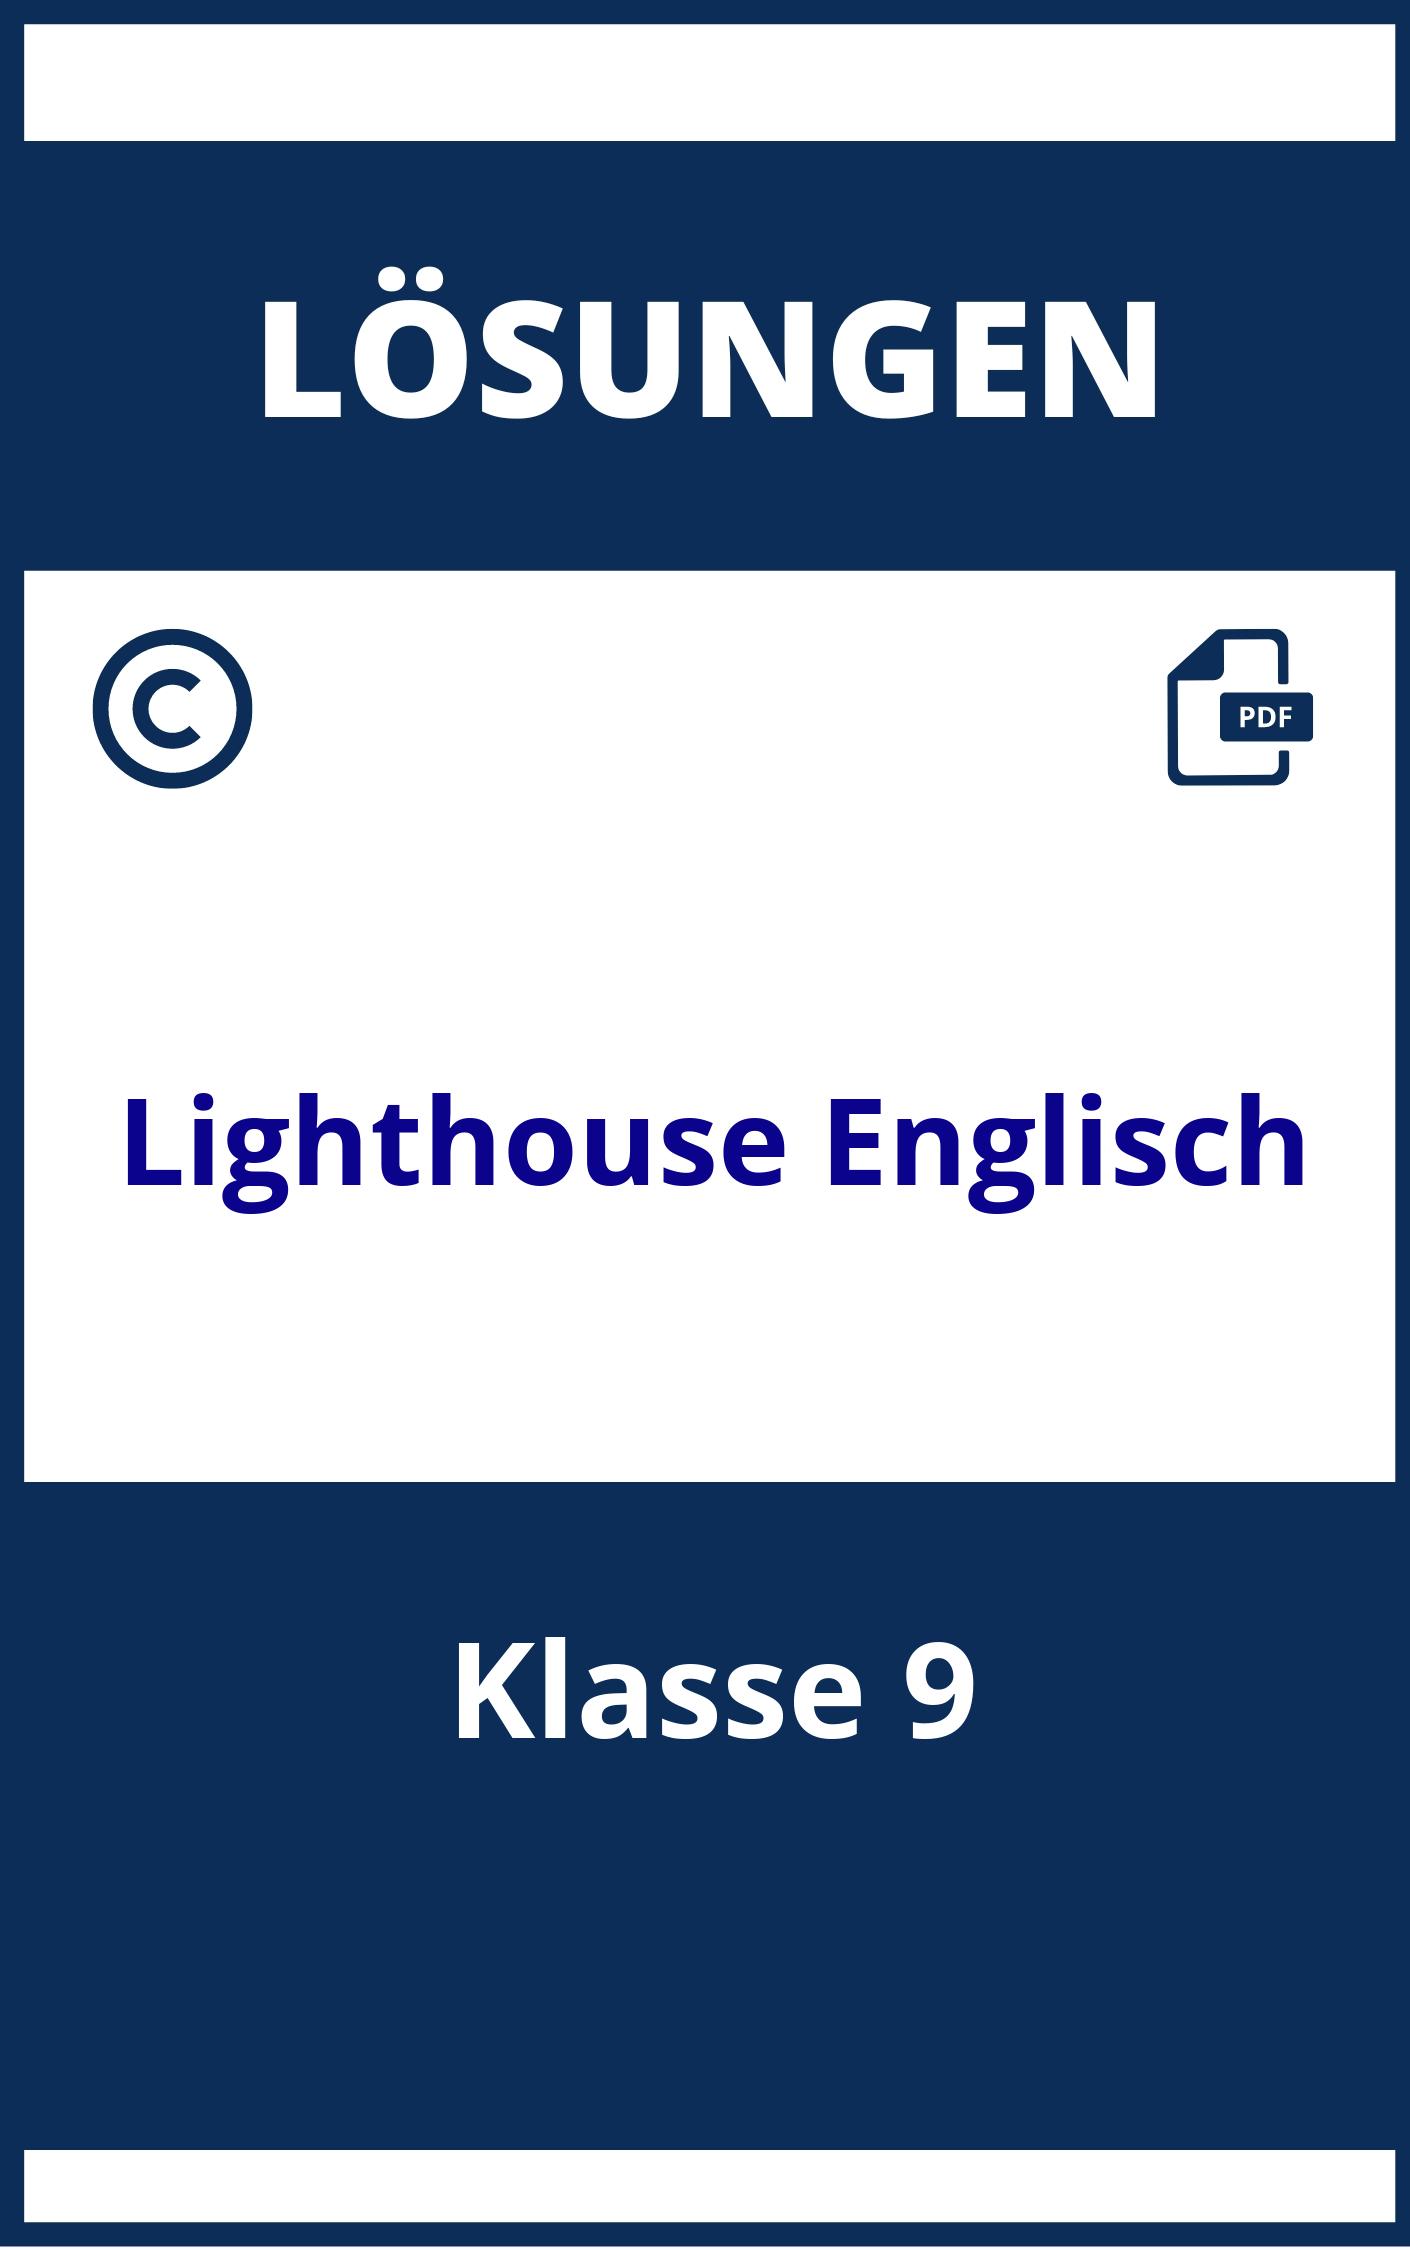 Lighthouse Englisch Klasse 9 Lösungen